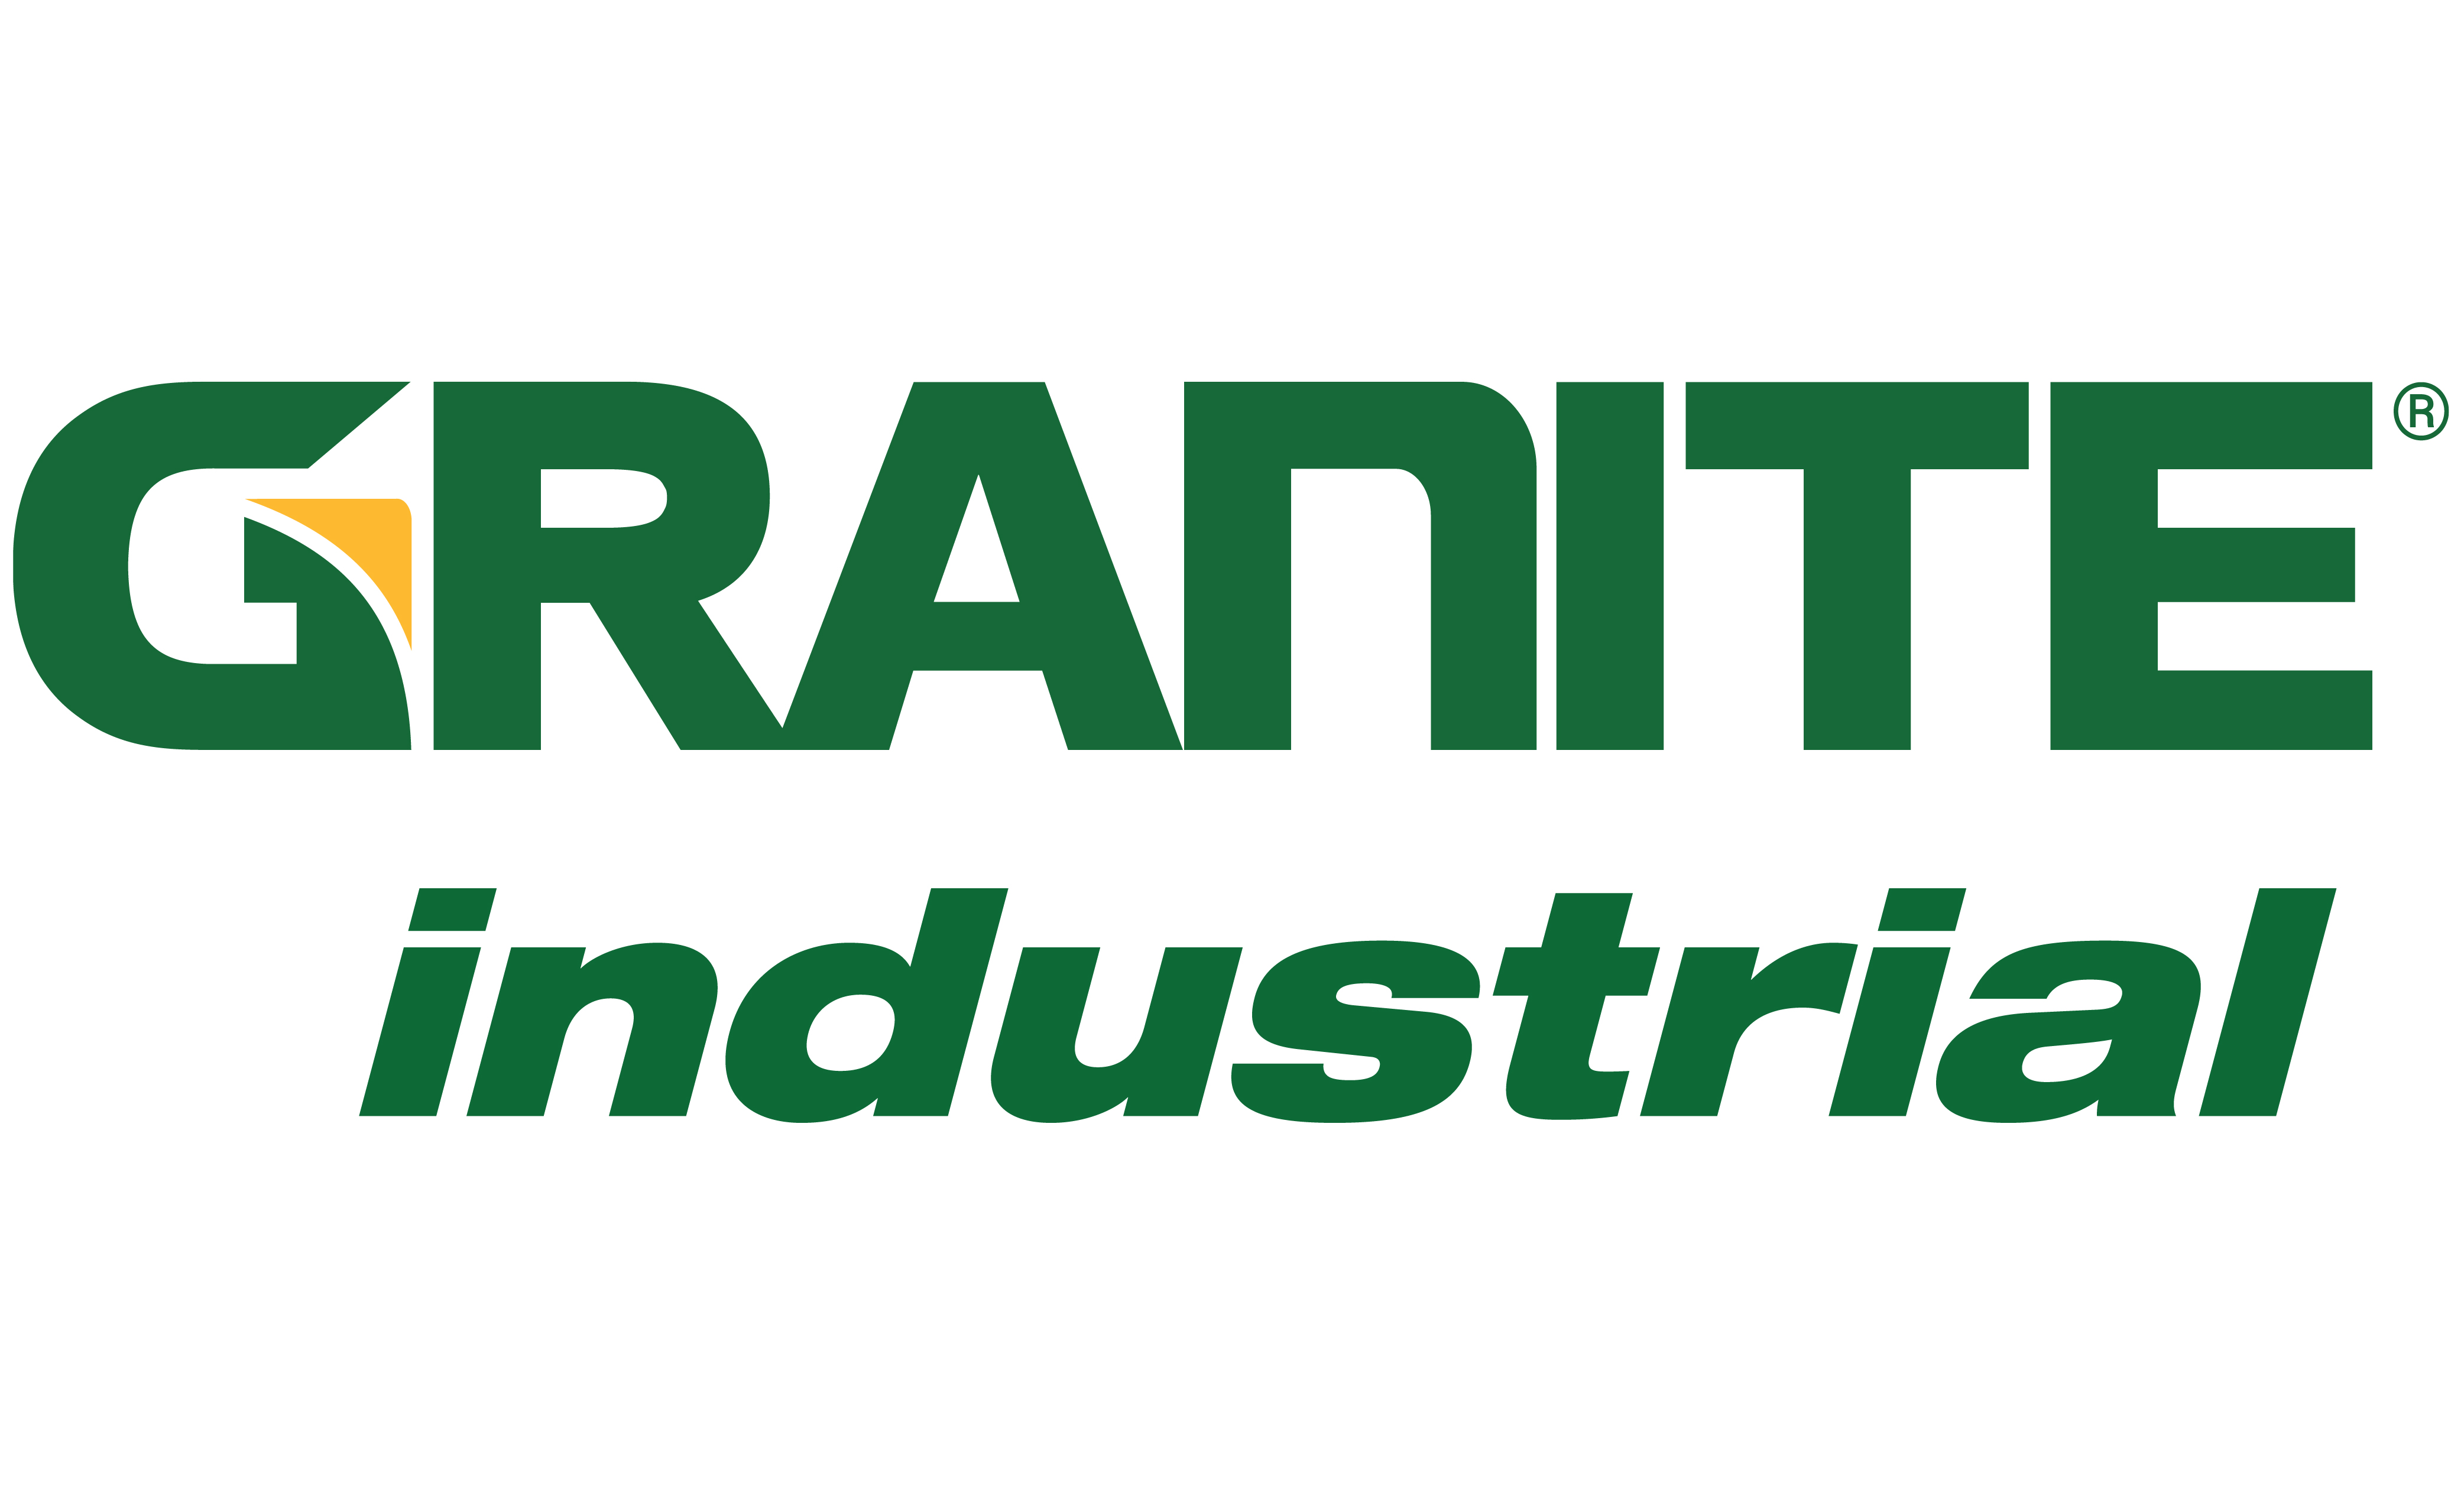 Granite Industrial